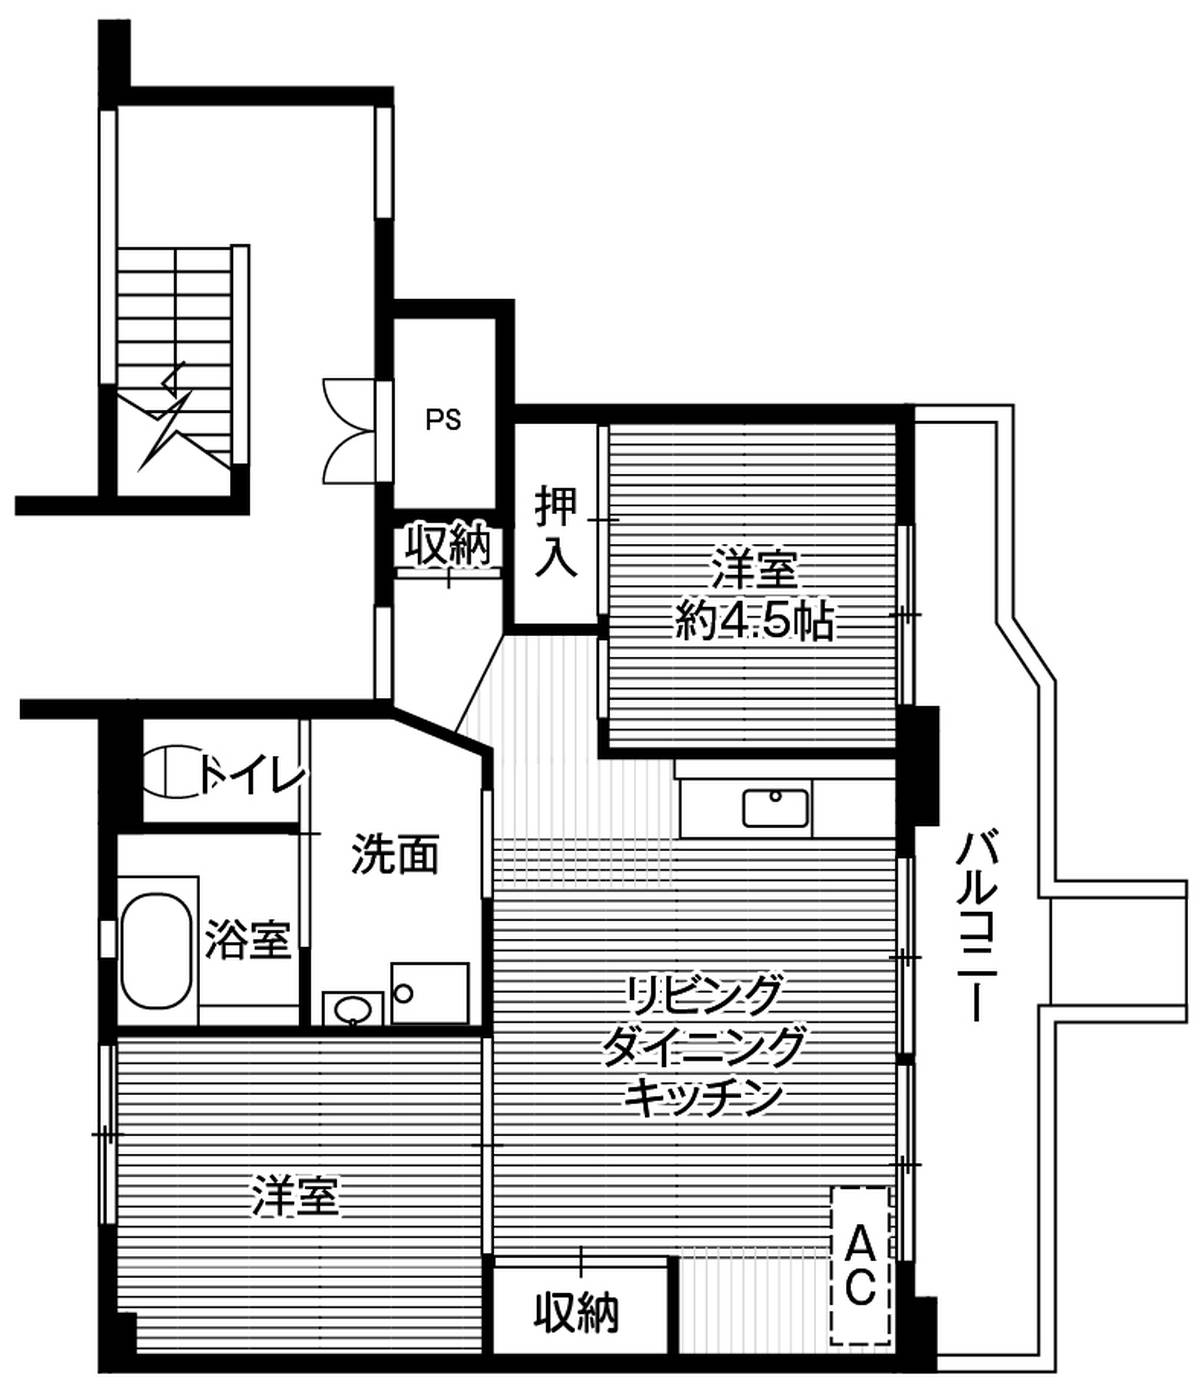 2LDK floorplan of Village House Aino in Aomori-shi